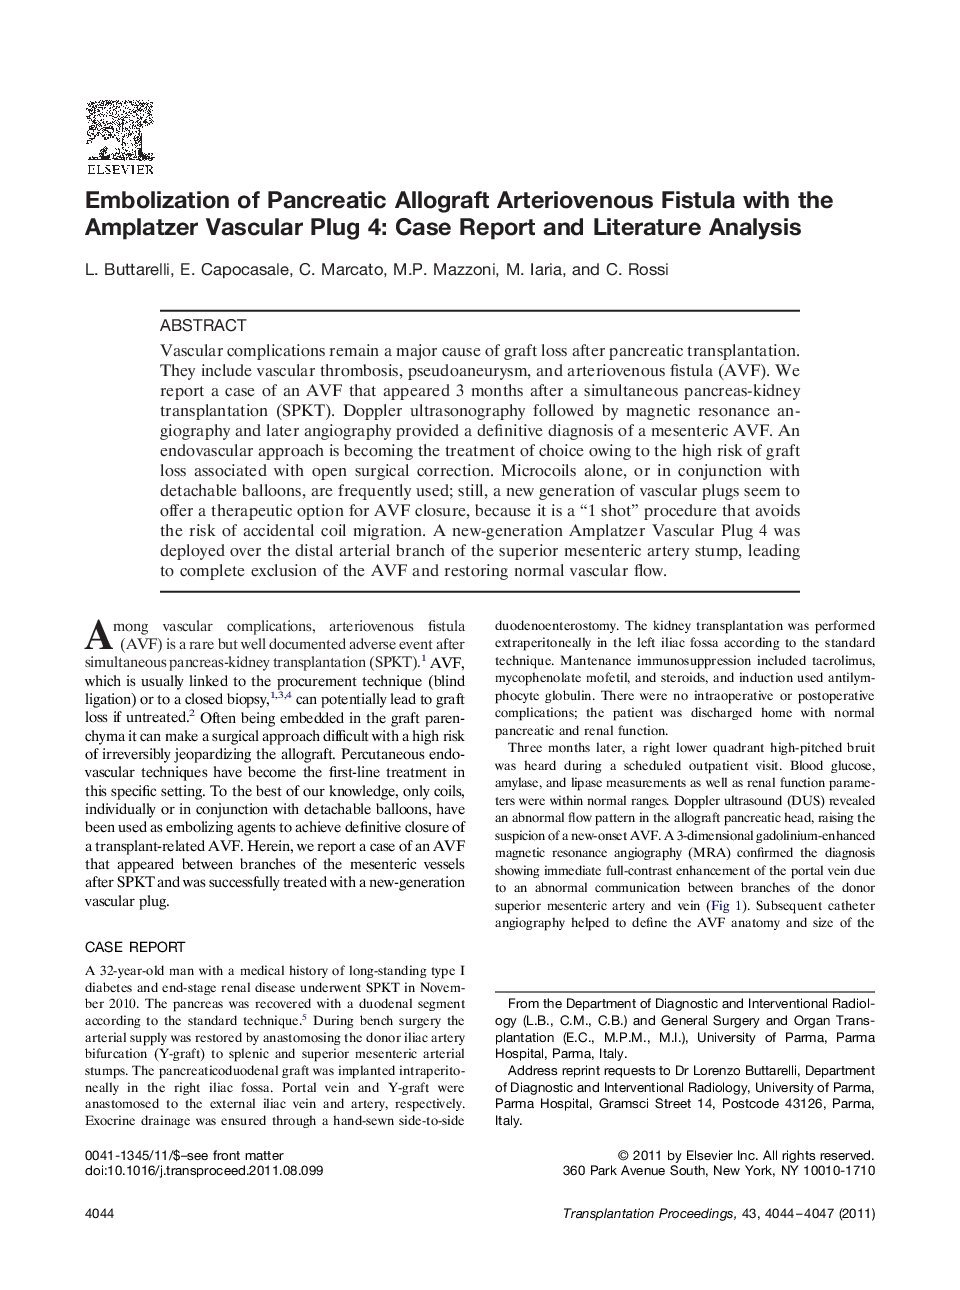 Case reportPancreas transplantationEmbolization of Pancreatic Allograft Arteriovenous Fistula with the Amplatzer Vascular Plug 4: Case Report and Literature Analysis